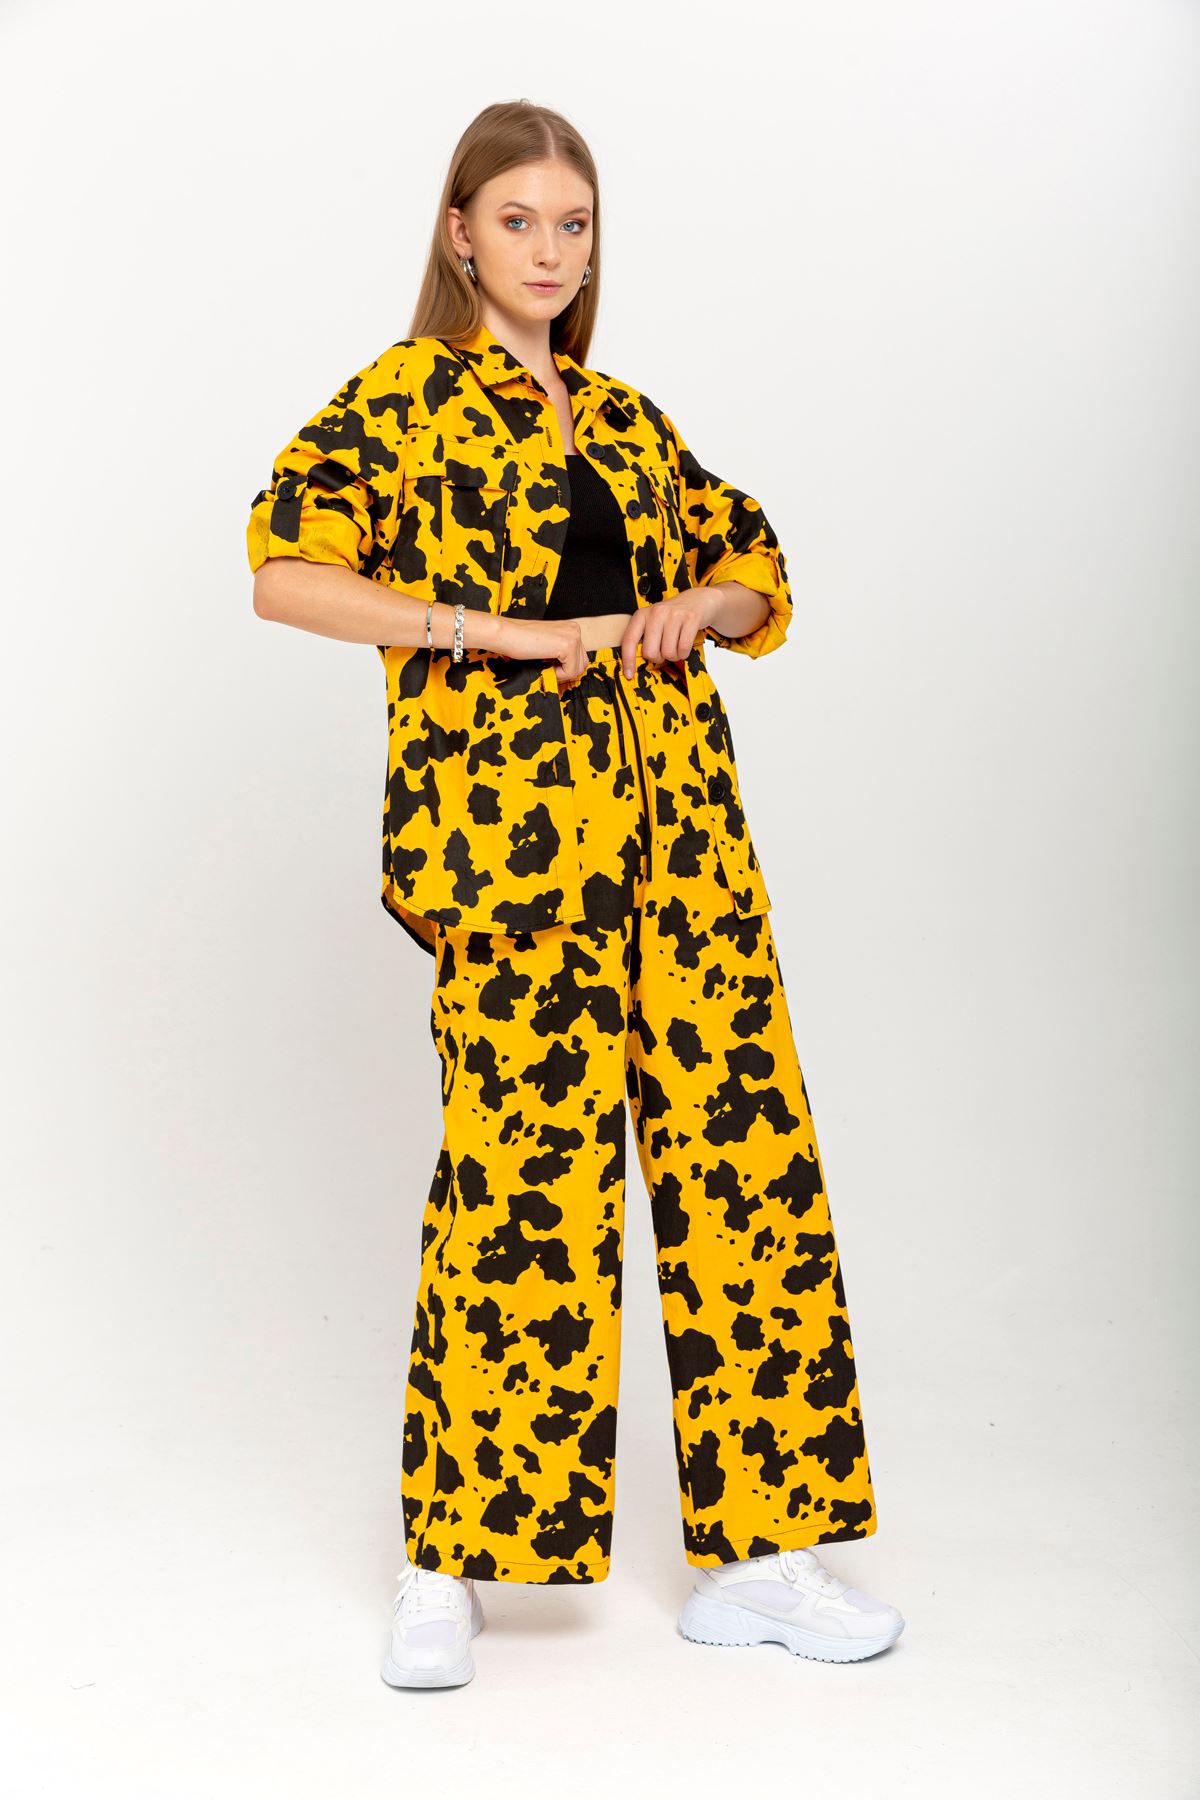 габардин ткань длинный коровье принт женские брюки - Желтый